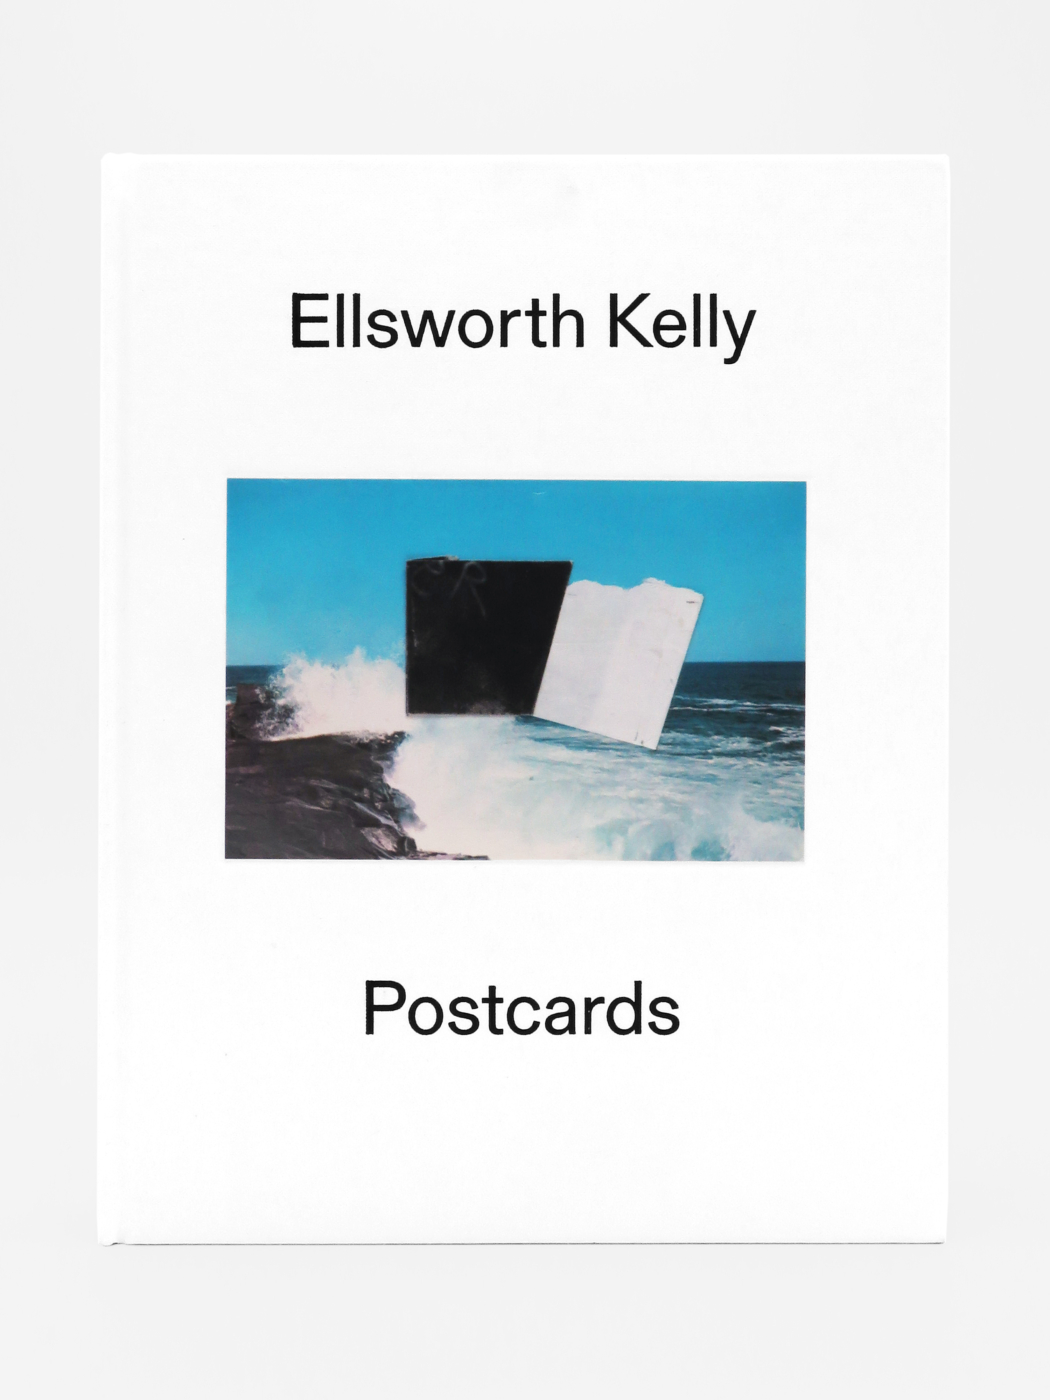 Ellsworth Kelly, Postcards